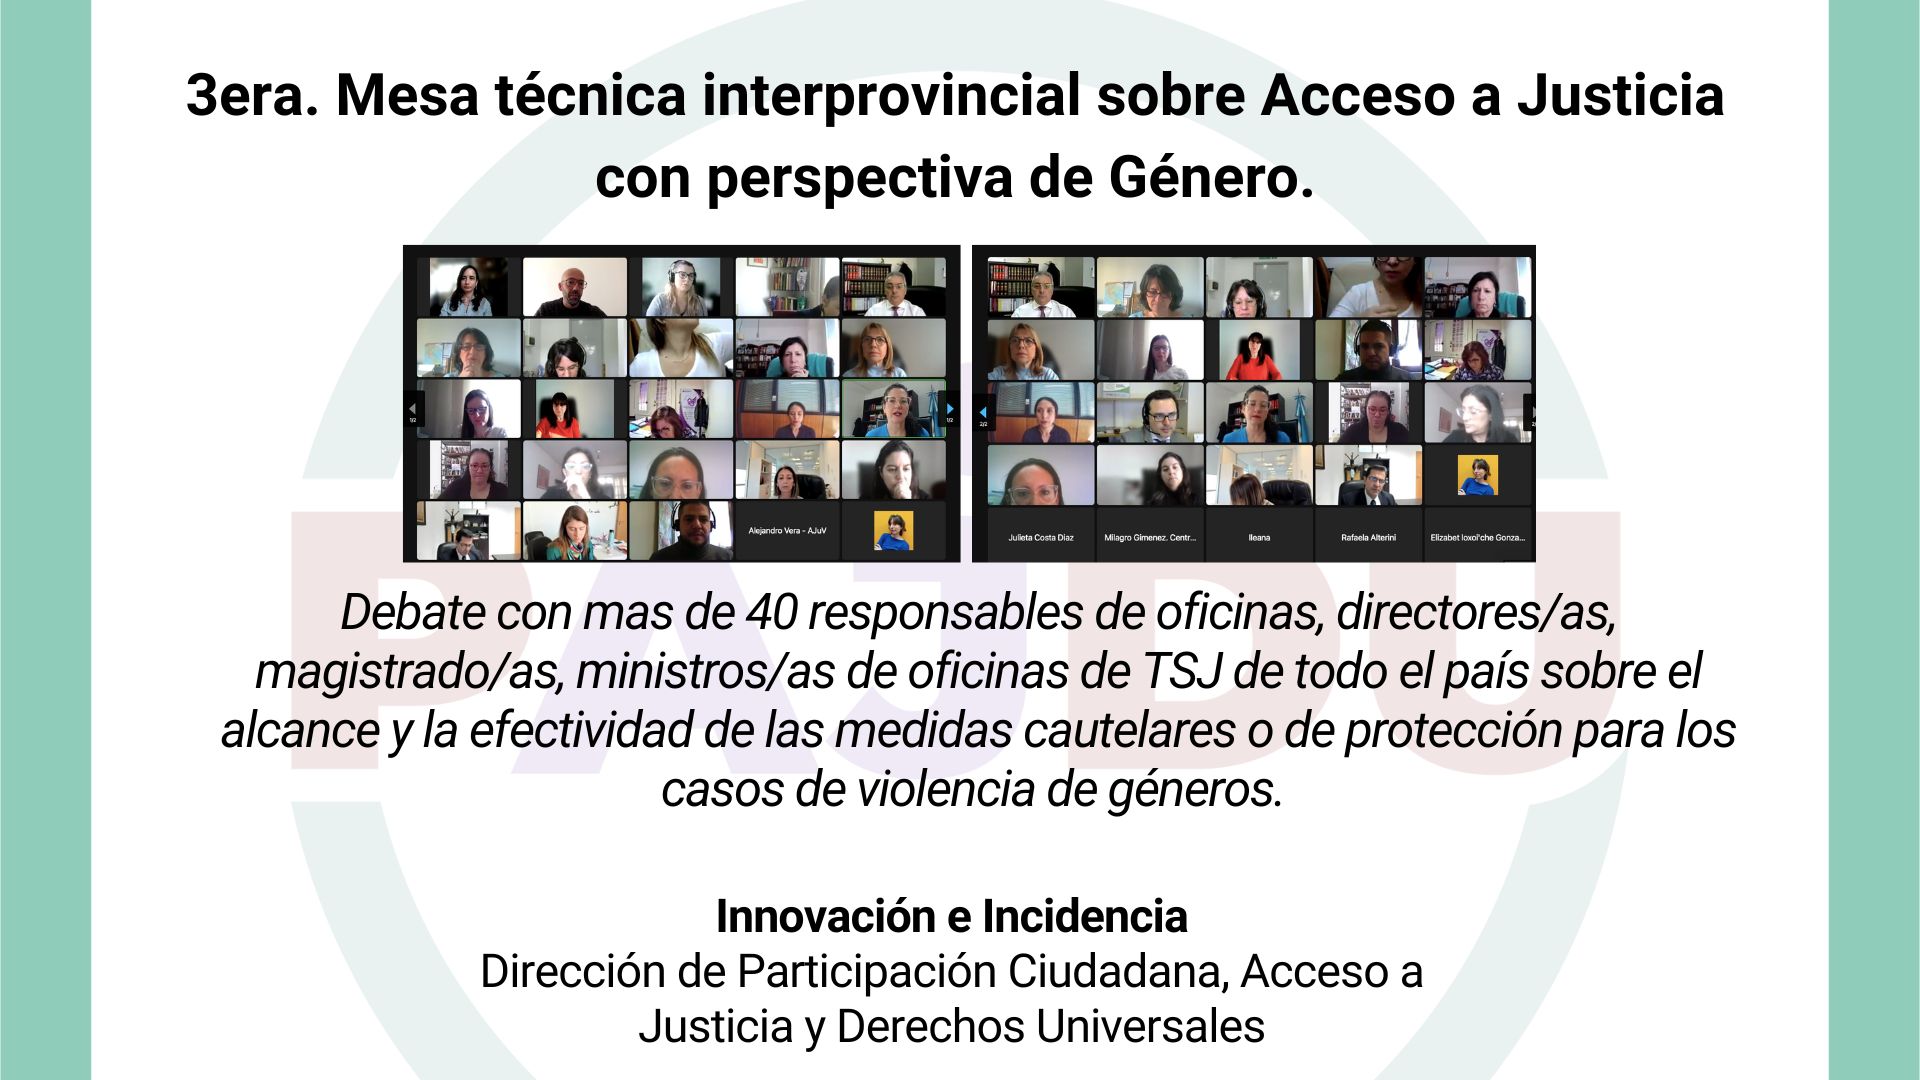 3era. Mesa técnica interprovincial sobre Acceso a Justicia con perspectiva de Género